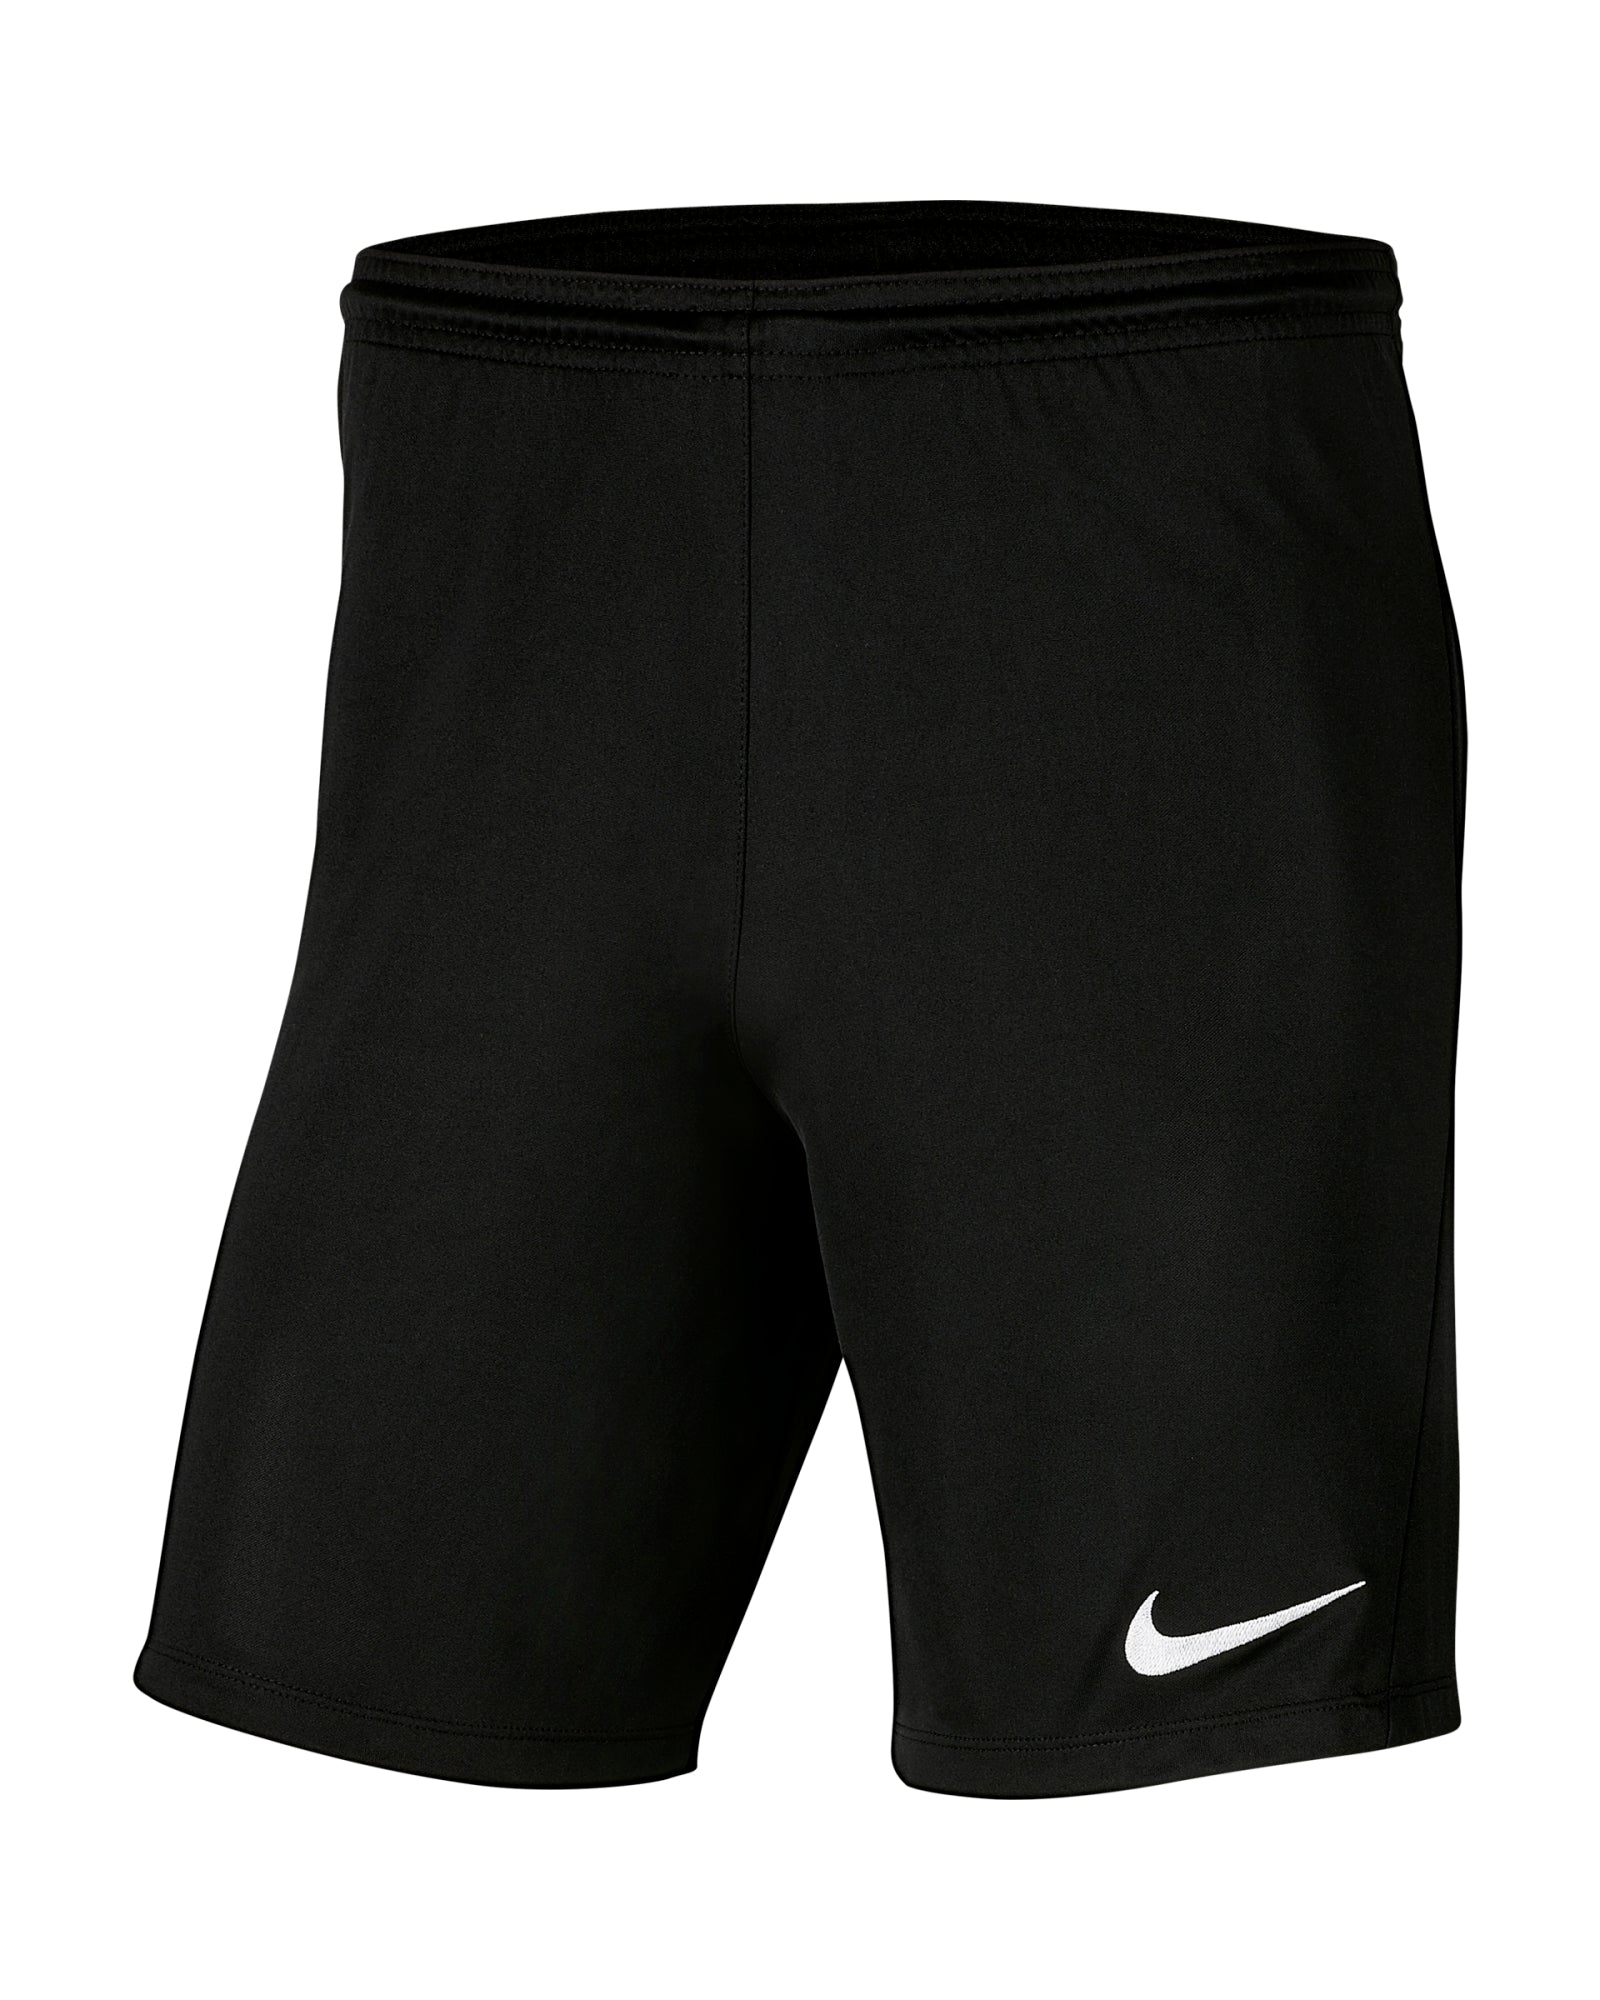 BRS - Nike Park 20 Short - Black